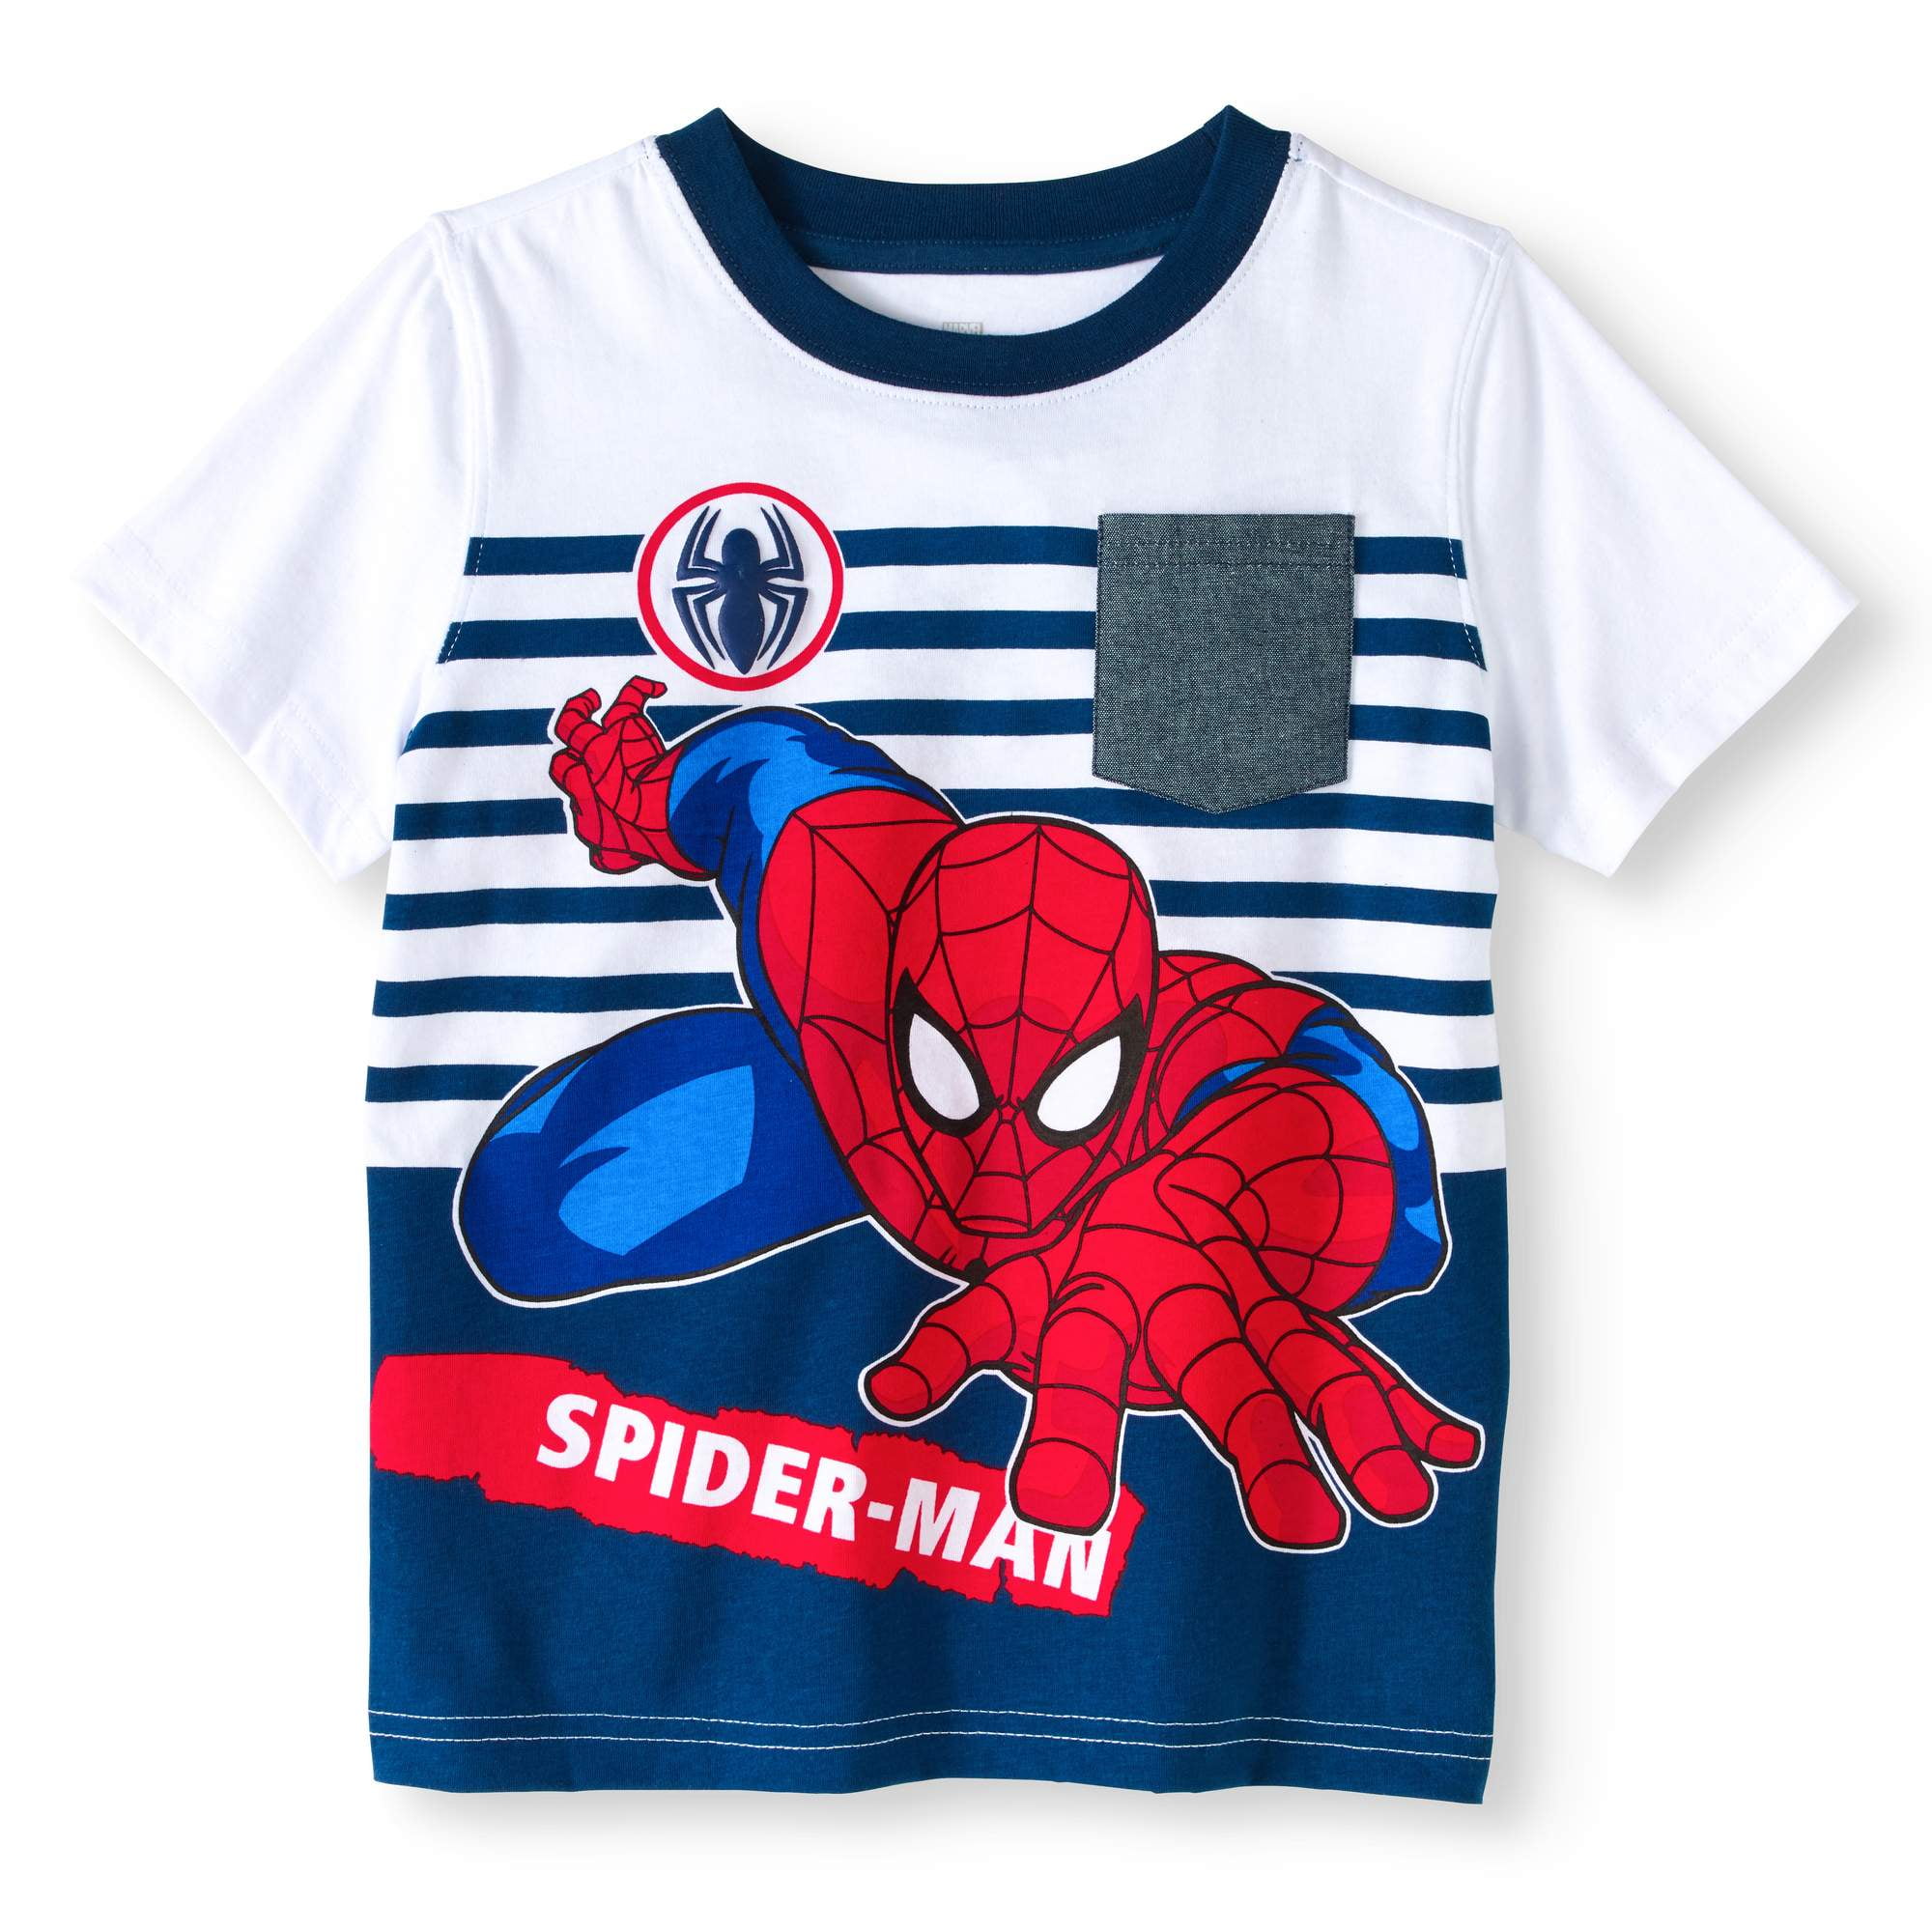 Spider-Man Toddler Boys' Short Sleeve Graphic Tee - Walmart.com